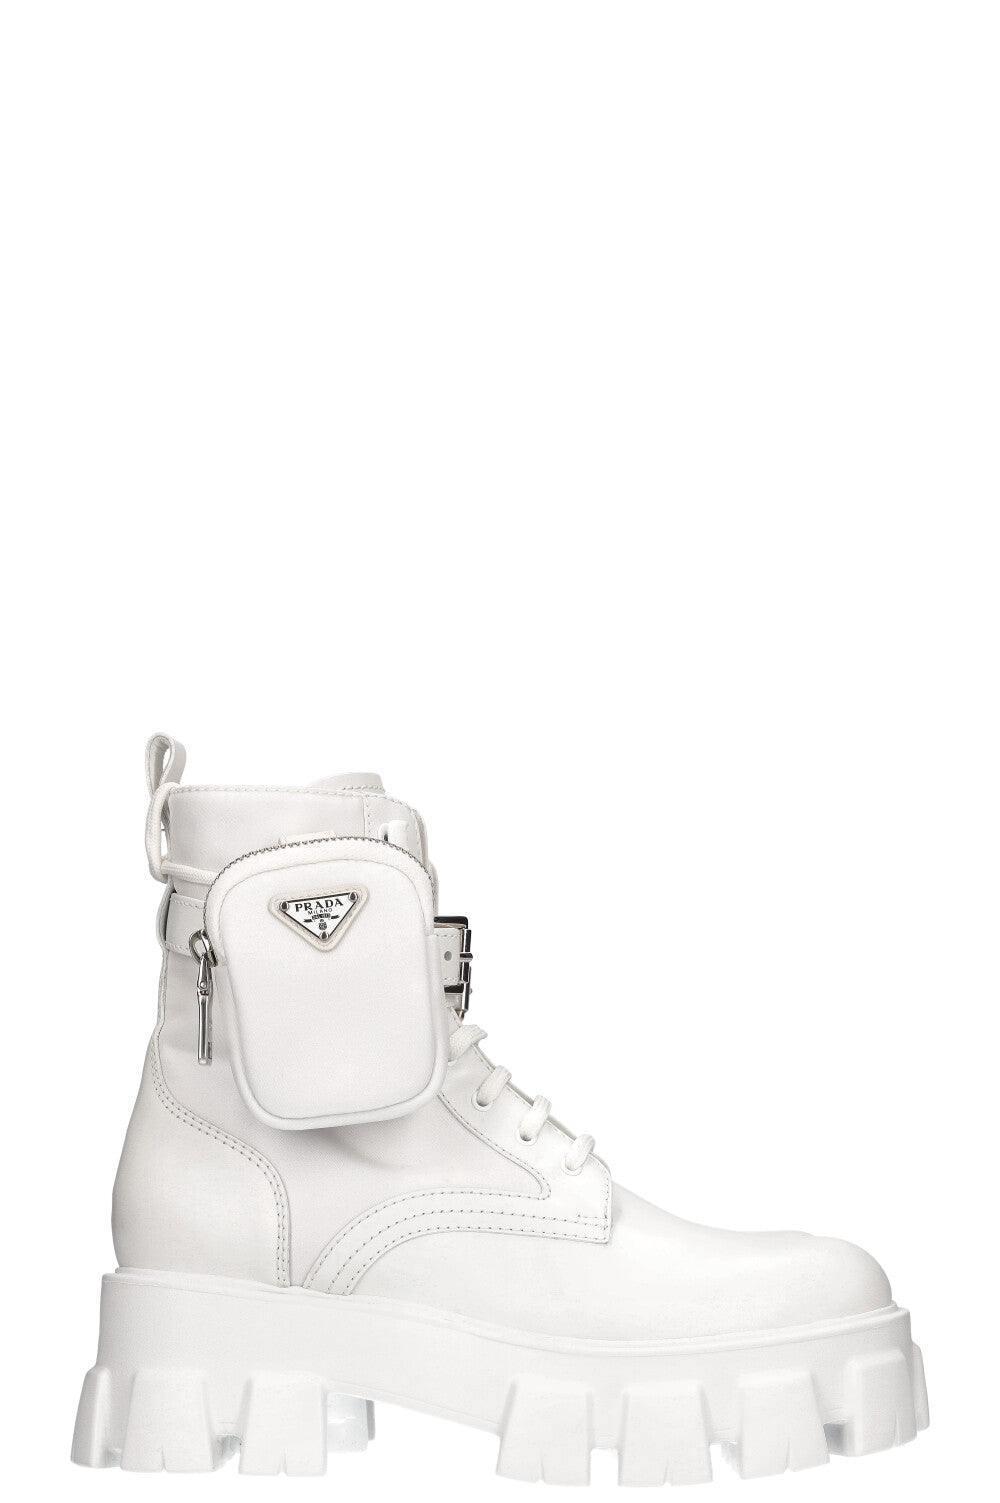 PRADA Monolith Boots White